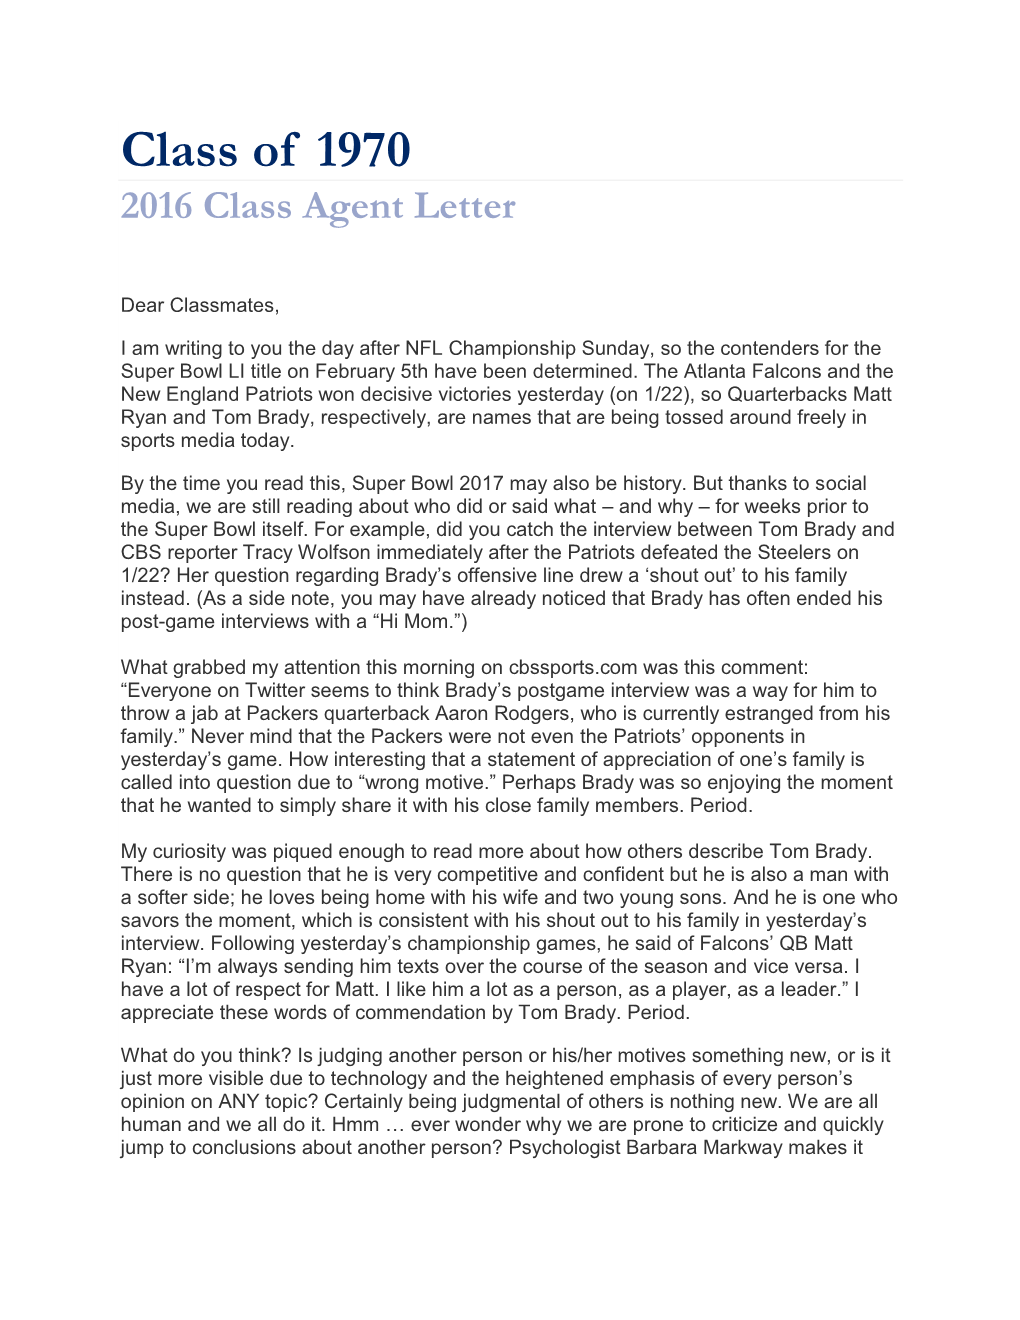 Class of 1970 2016 Class Agent Letter